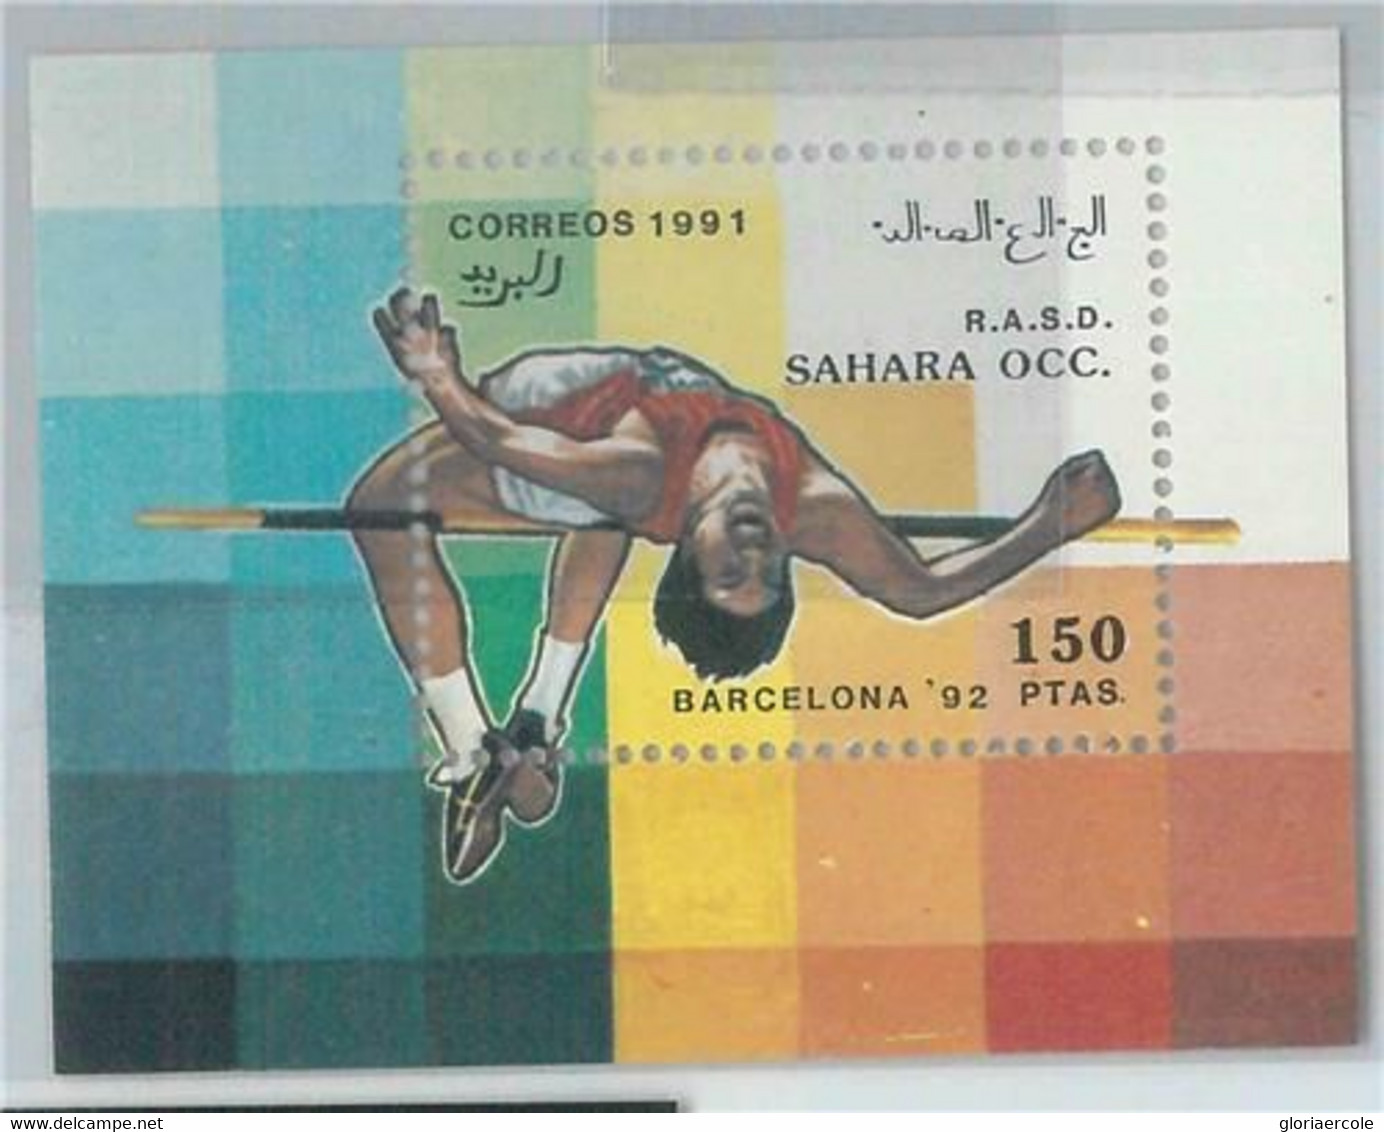 C0377 - Western SAHARA OCCIDENTAL - 1991  HIGH JUMP Barcelona 92  - Sheet  MNH - Springreiten